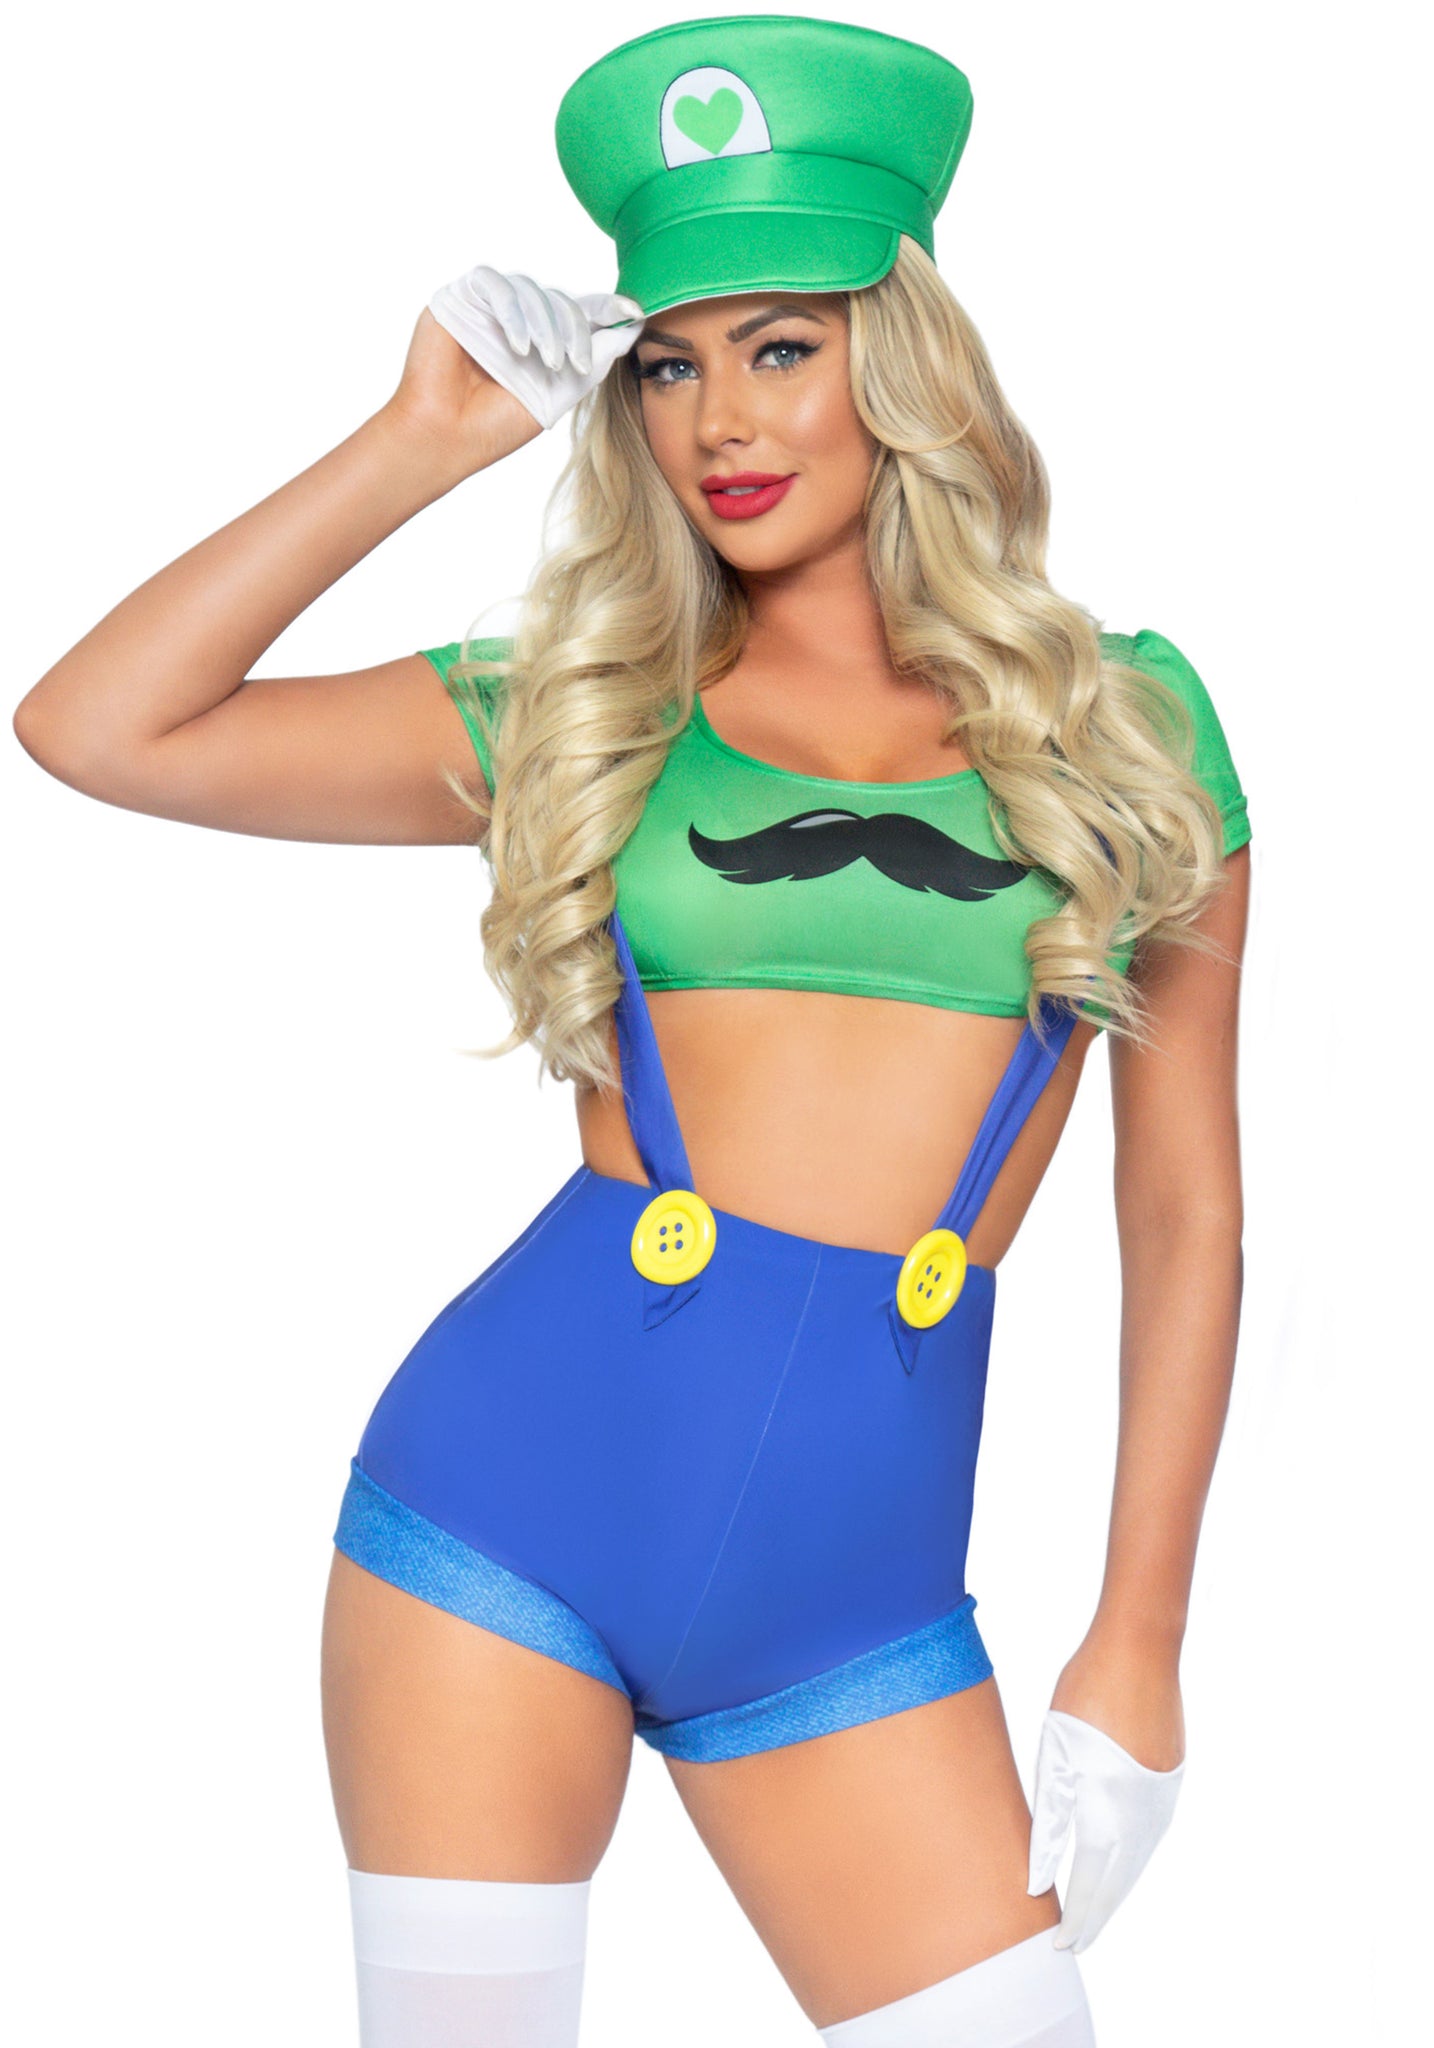 Gamer Sidekick Halloween Costume - Green/Blue